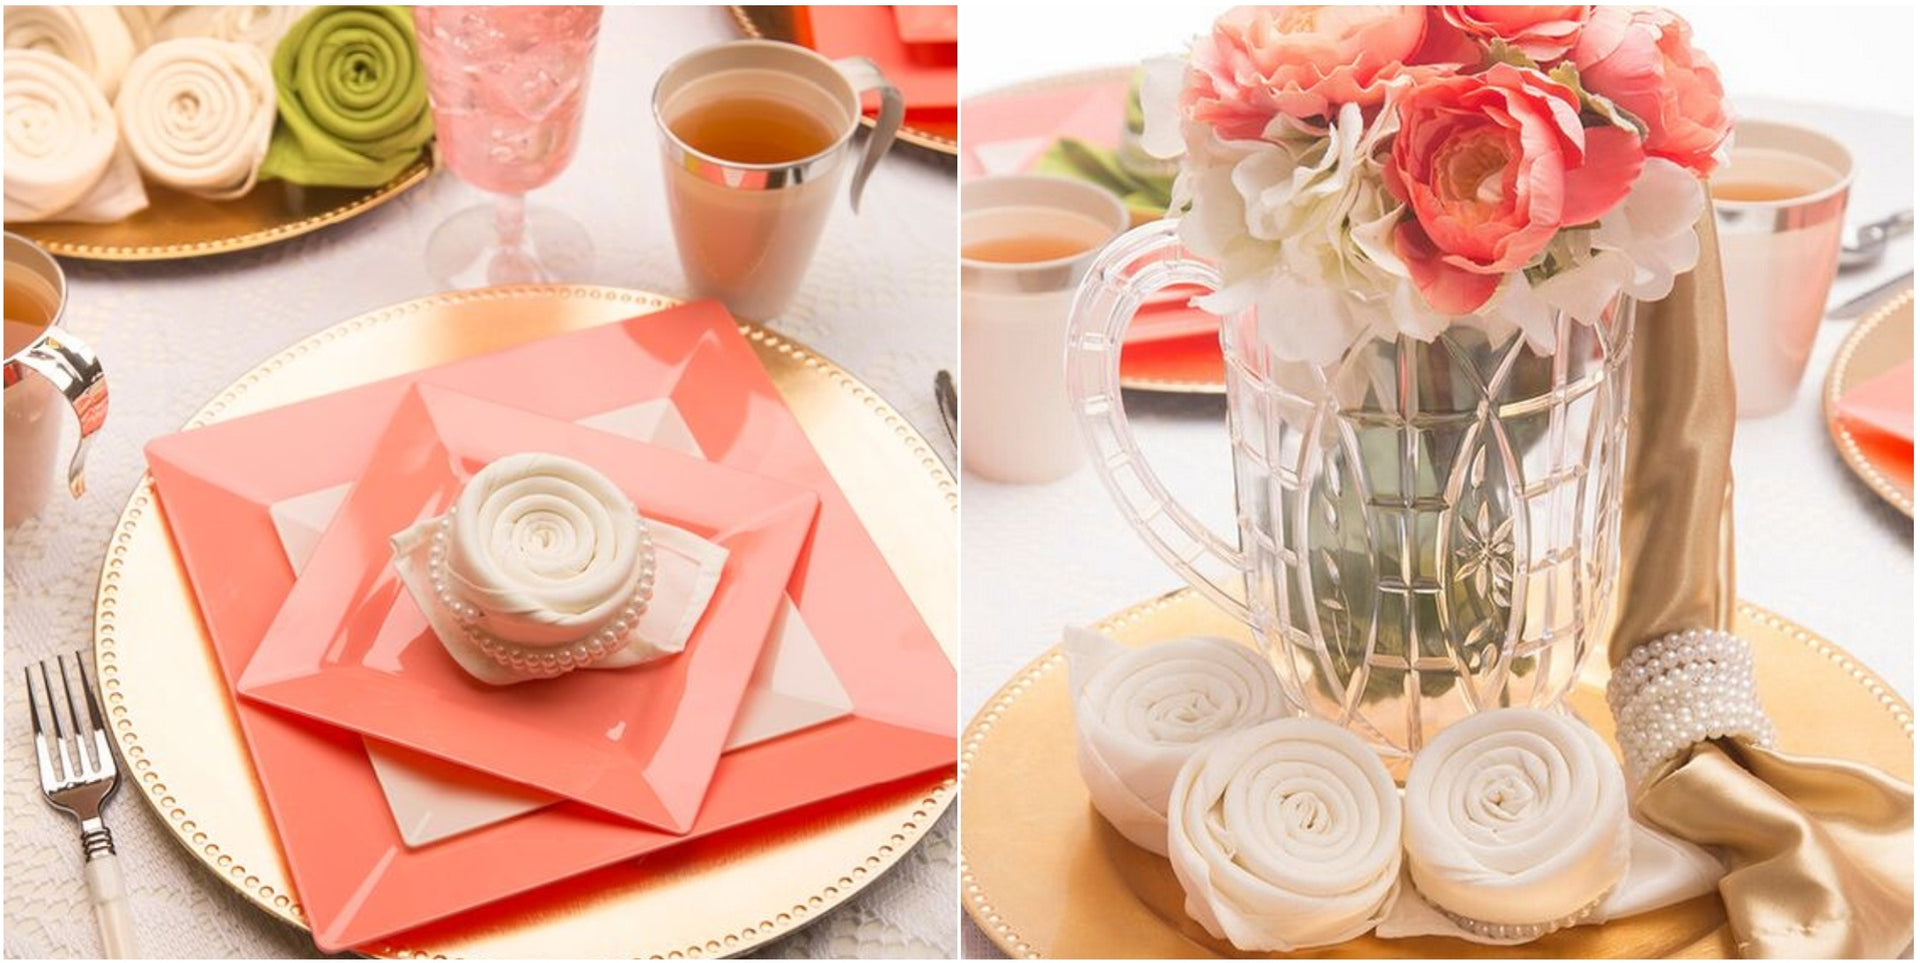 How to Create a DIY Rose Napkin Fold?